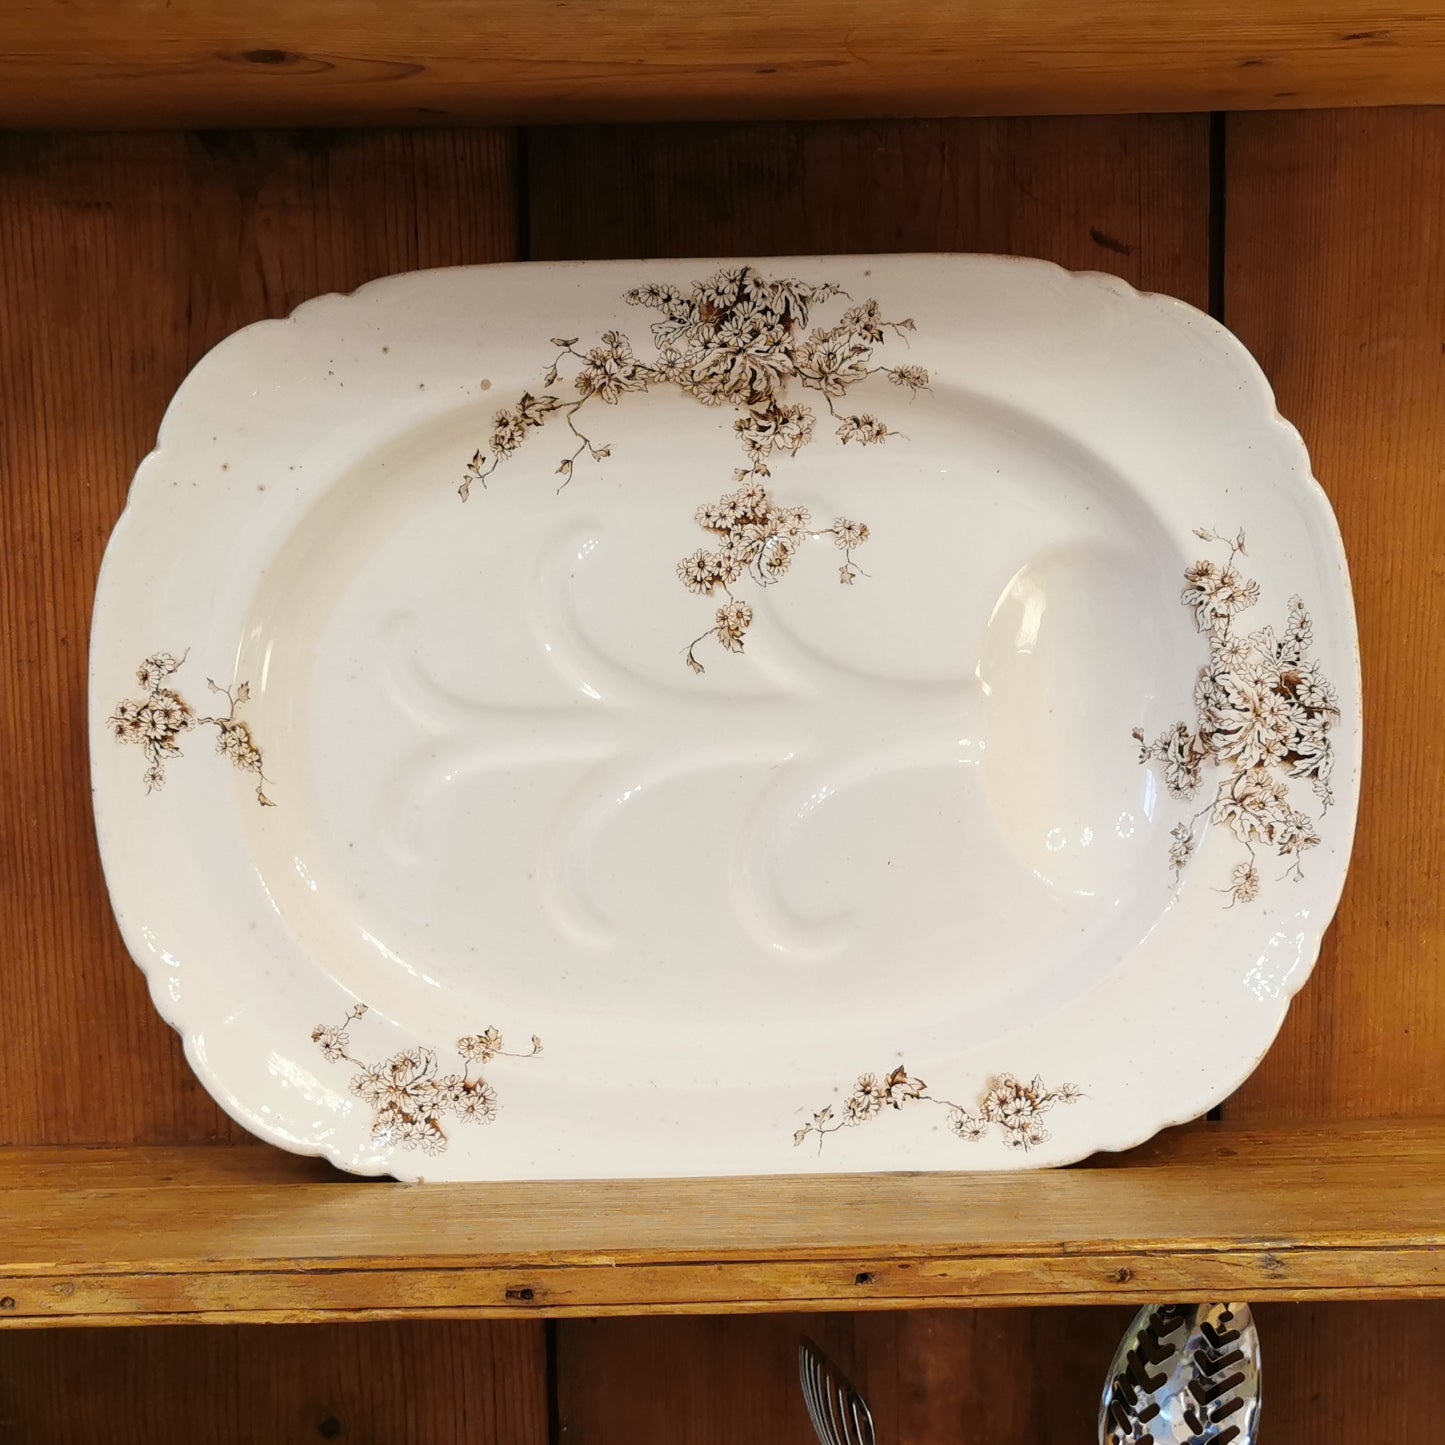 A Magnificent Antique George Jones & Sons Cresent China June pattern Meat Platter